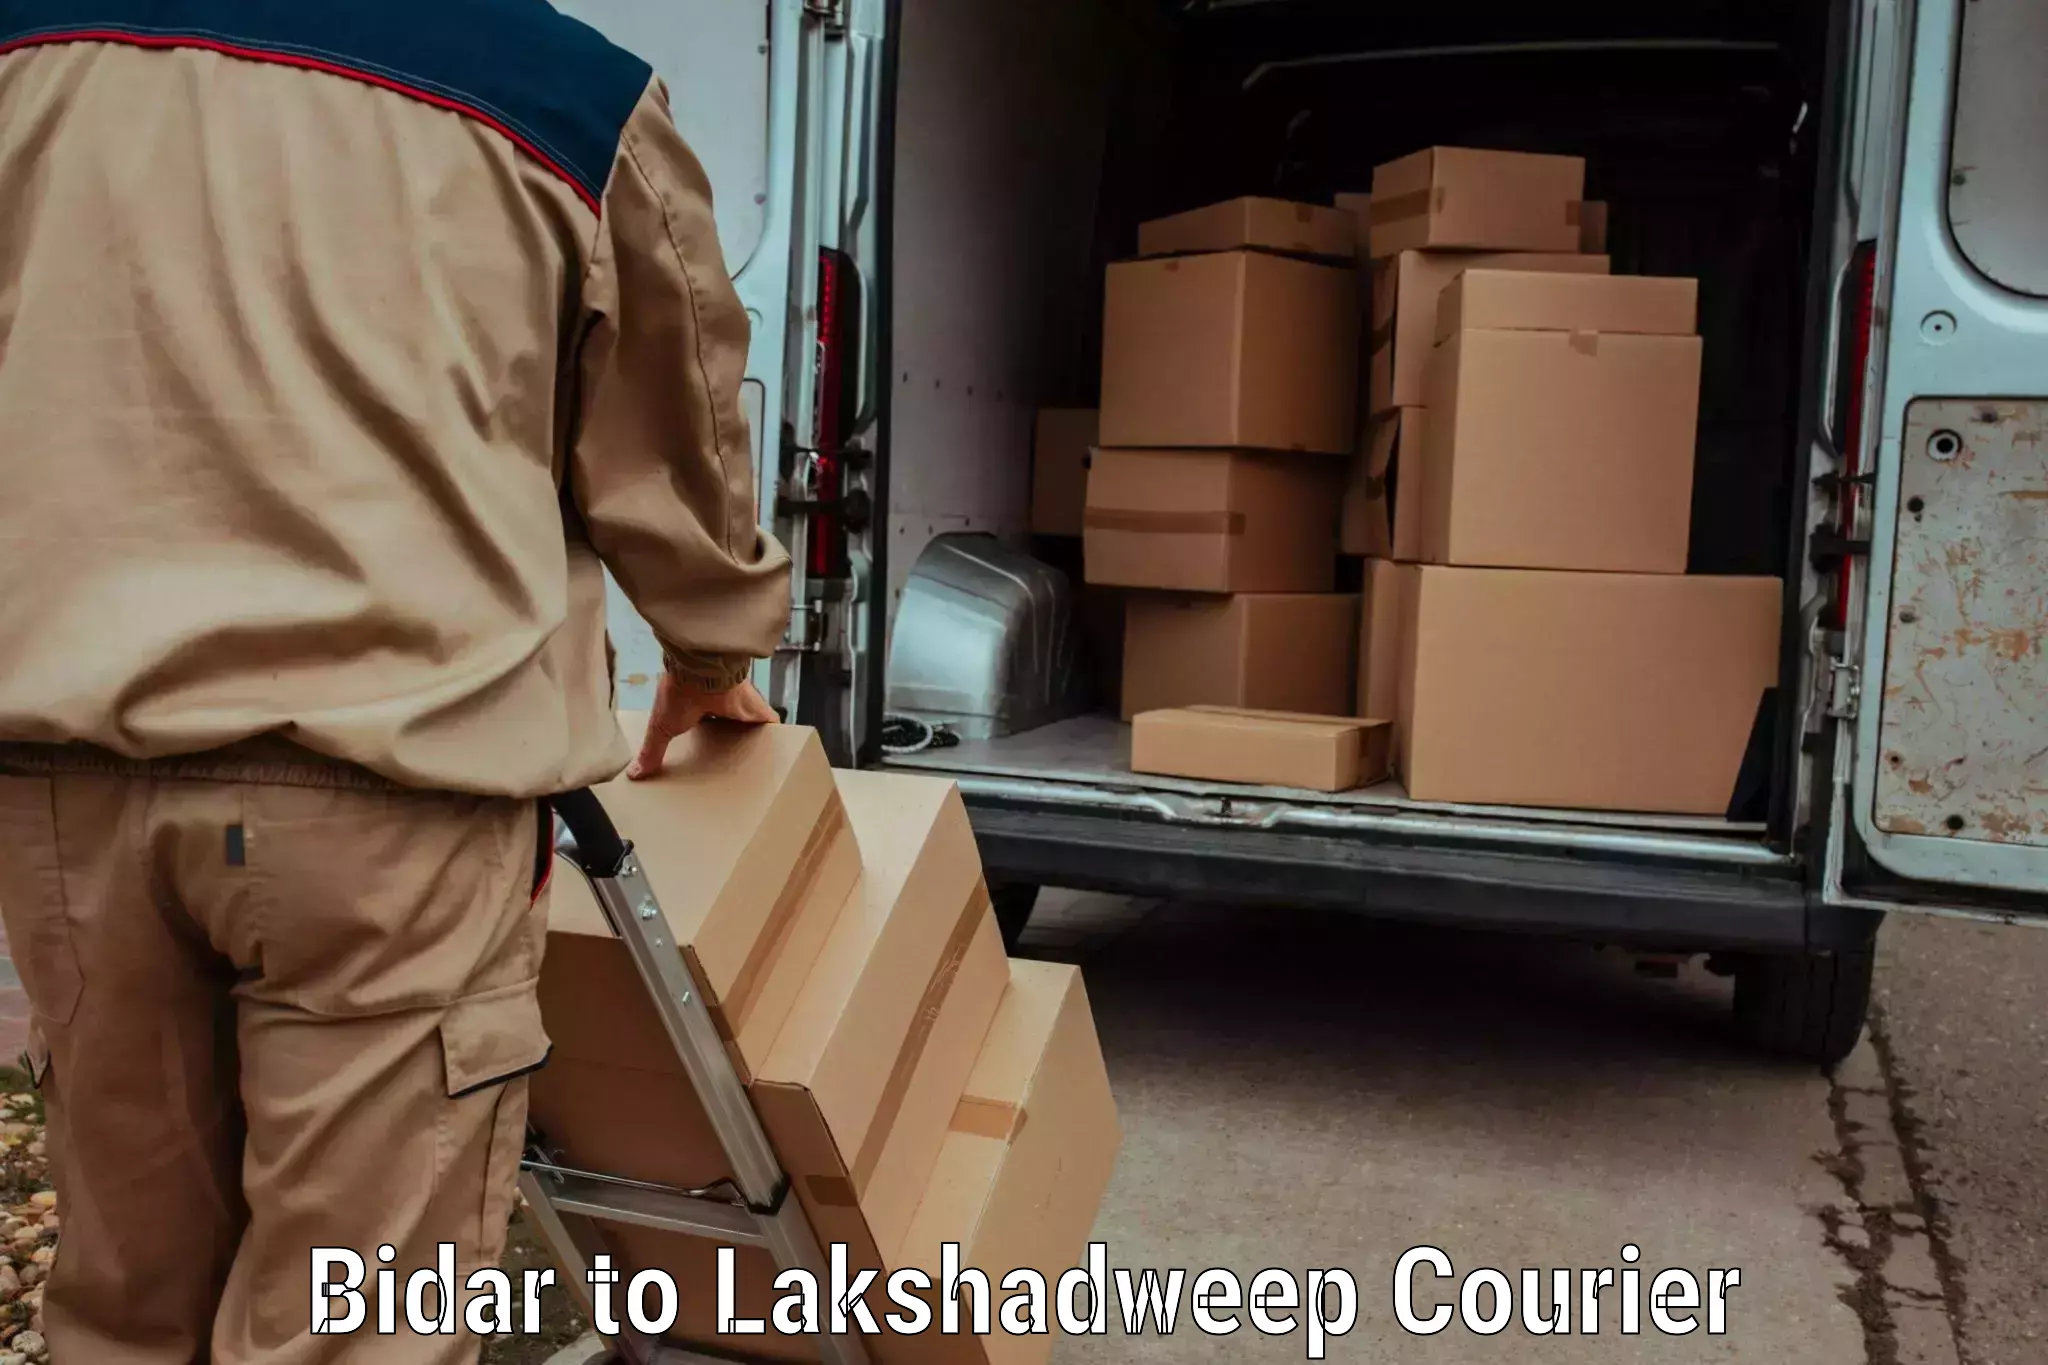 Baggage transport network Bidar to Lakshadweep